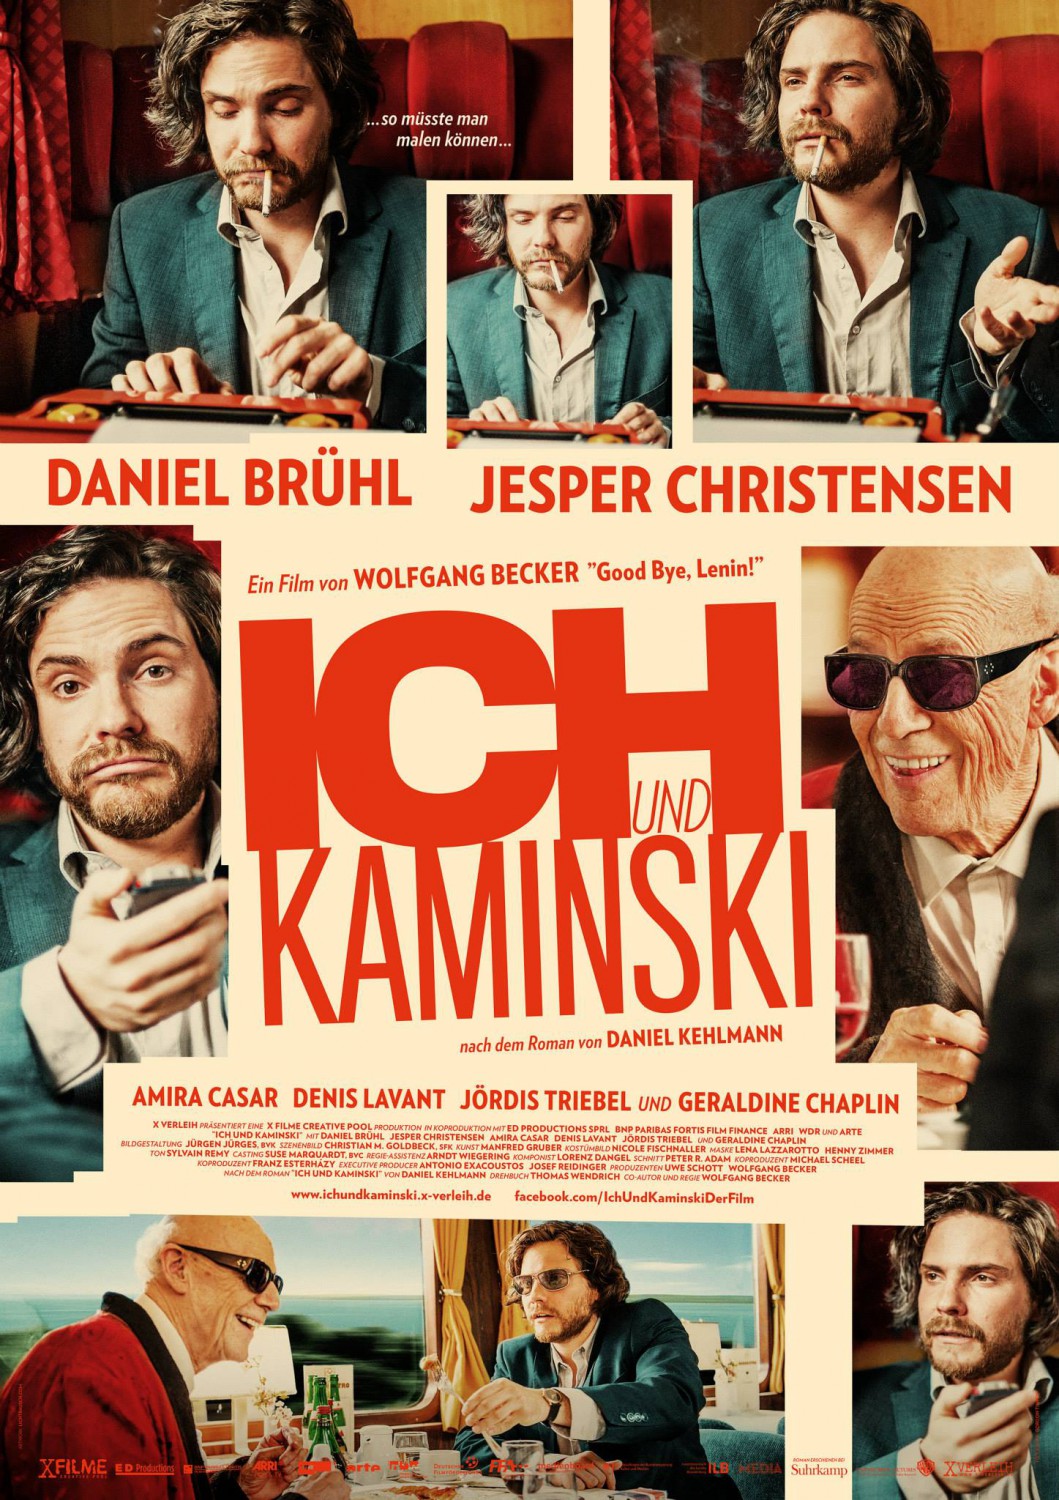 Extra Large Movie Poster Image for Ich und Kaminski 